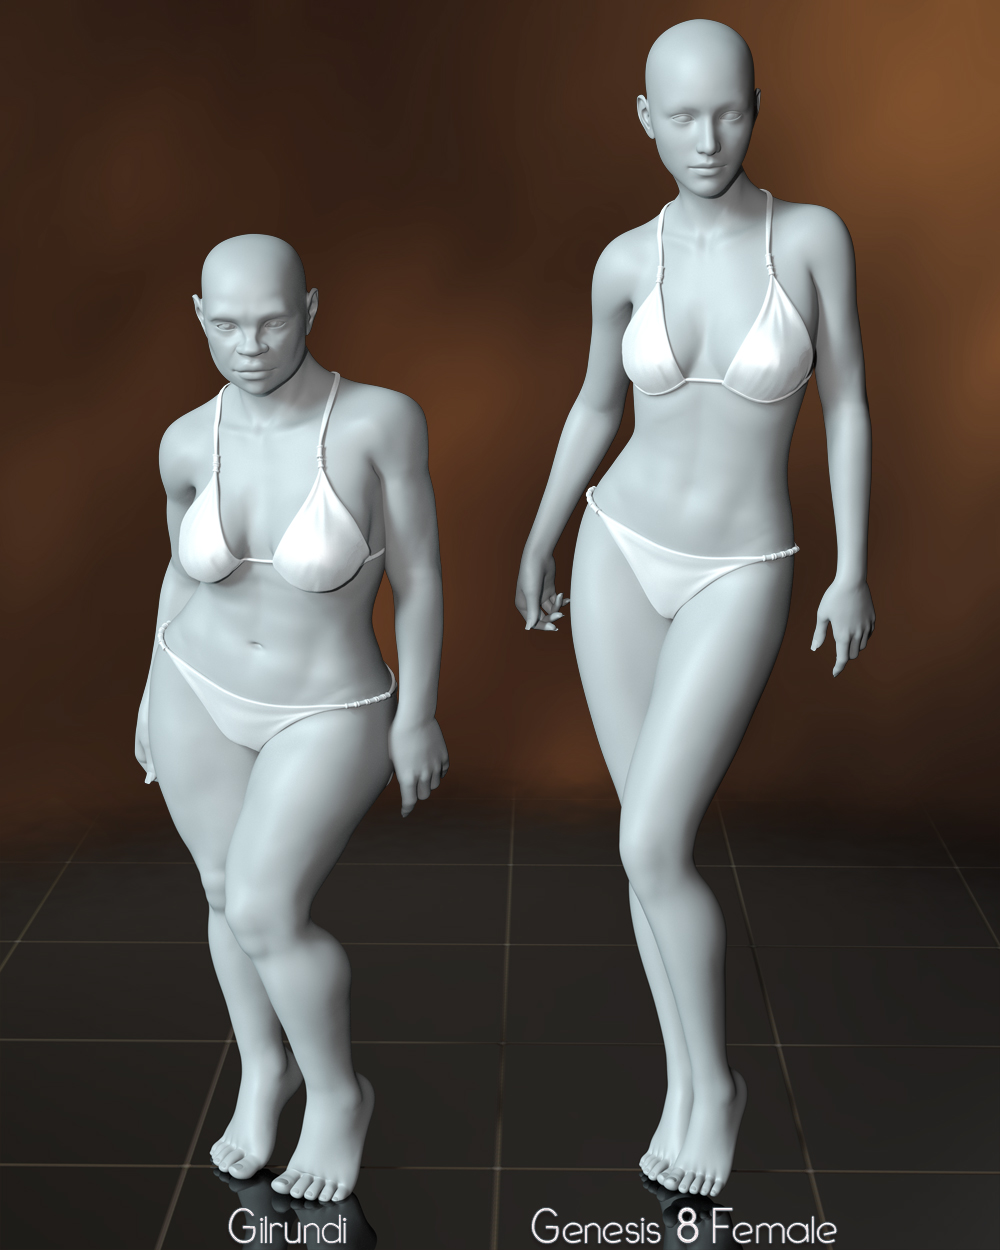 Gilrundi for Genesis 8 Female by: TwiztedMetal, 3D Models by Daz 3D